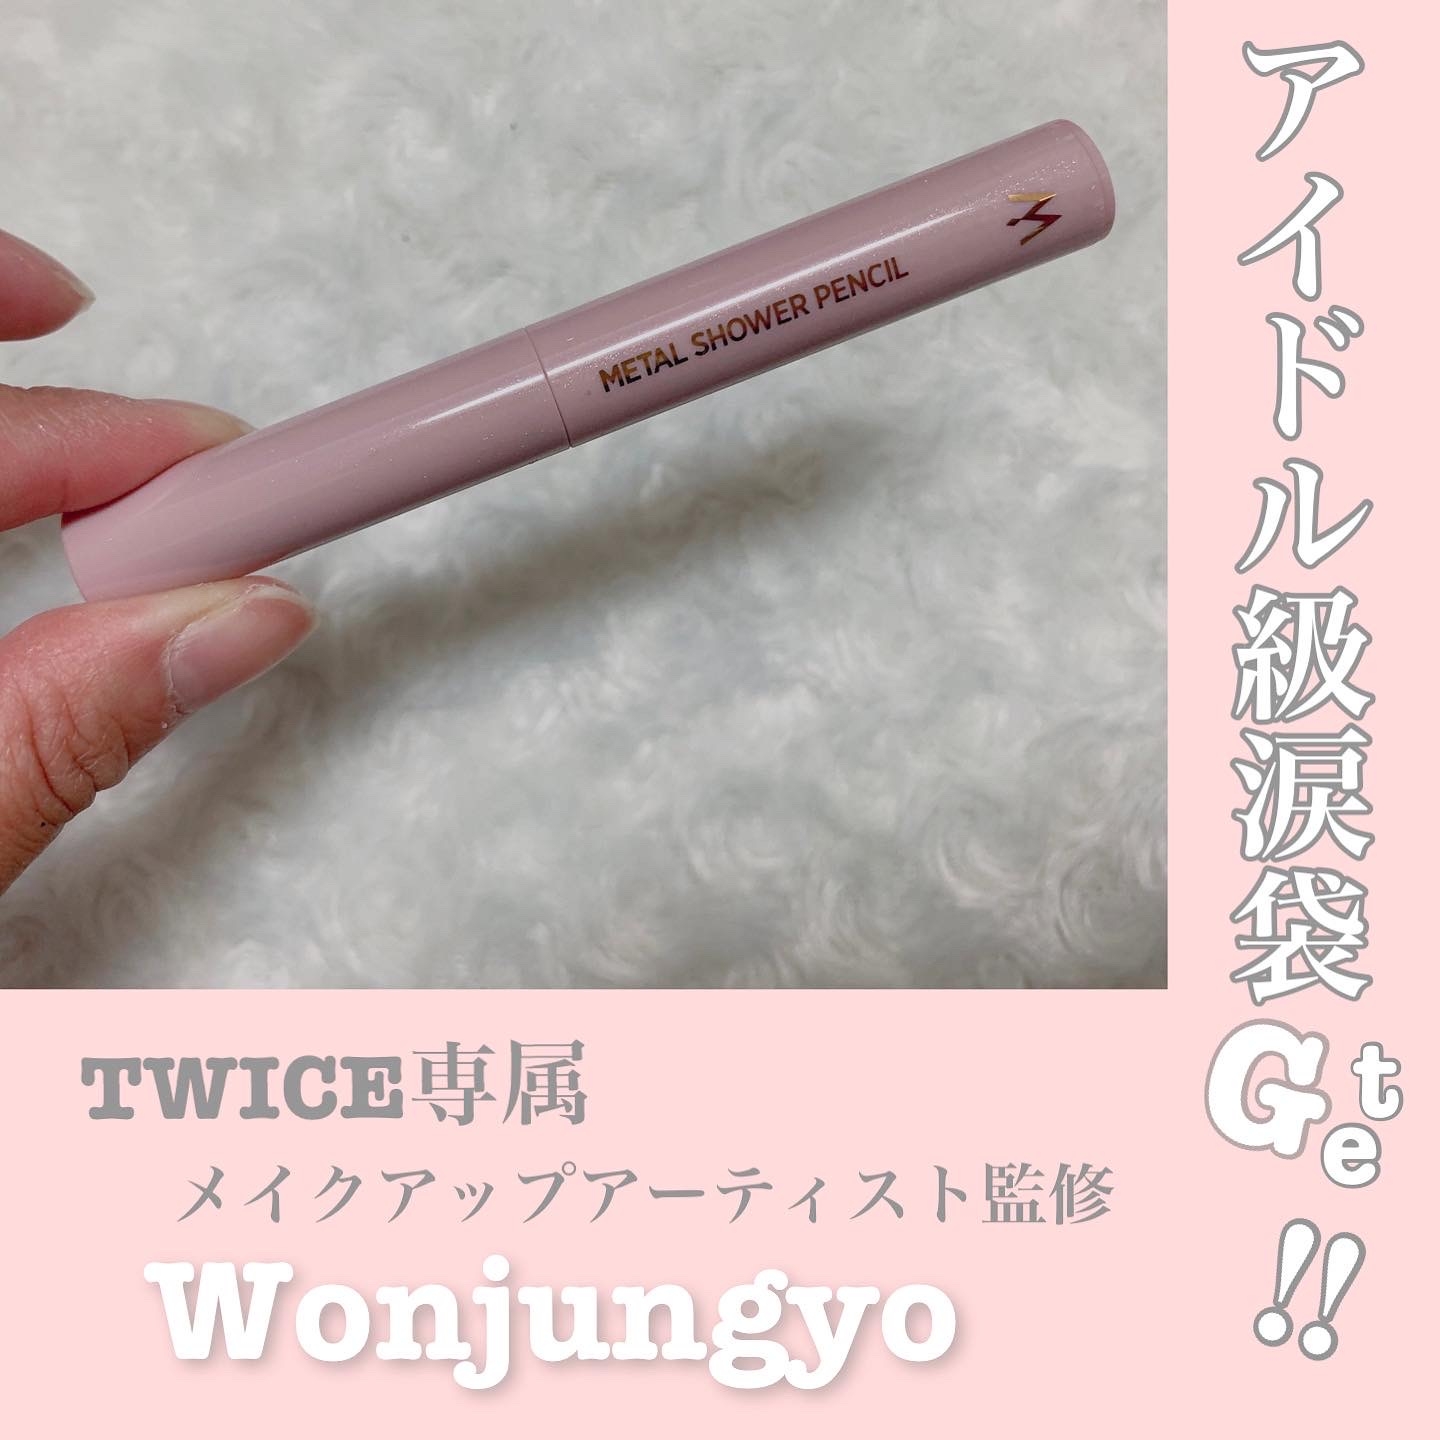 Wonjungyo(ウォンジョンヨ) メタルシャワーペンシルの良い点・メリットに関するはまちママさんの口コミ画像2